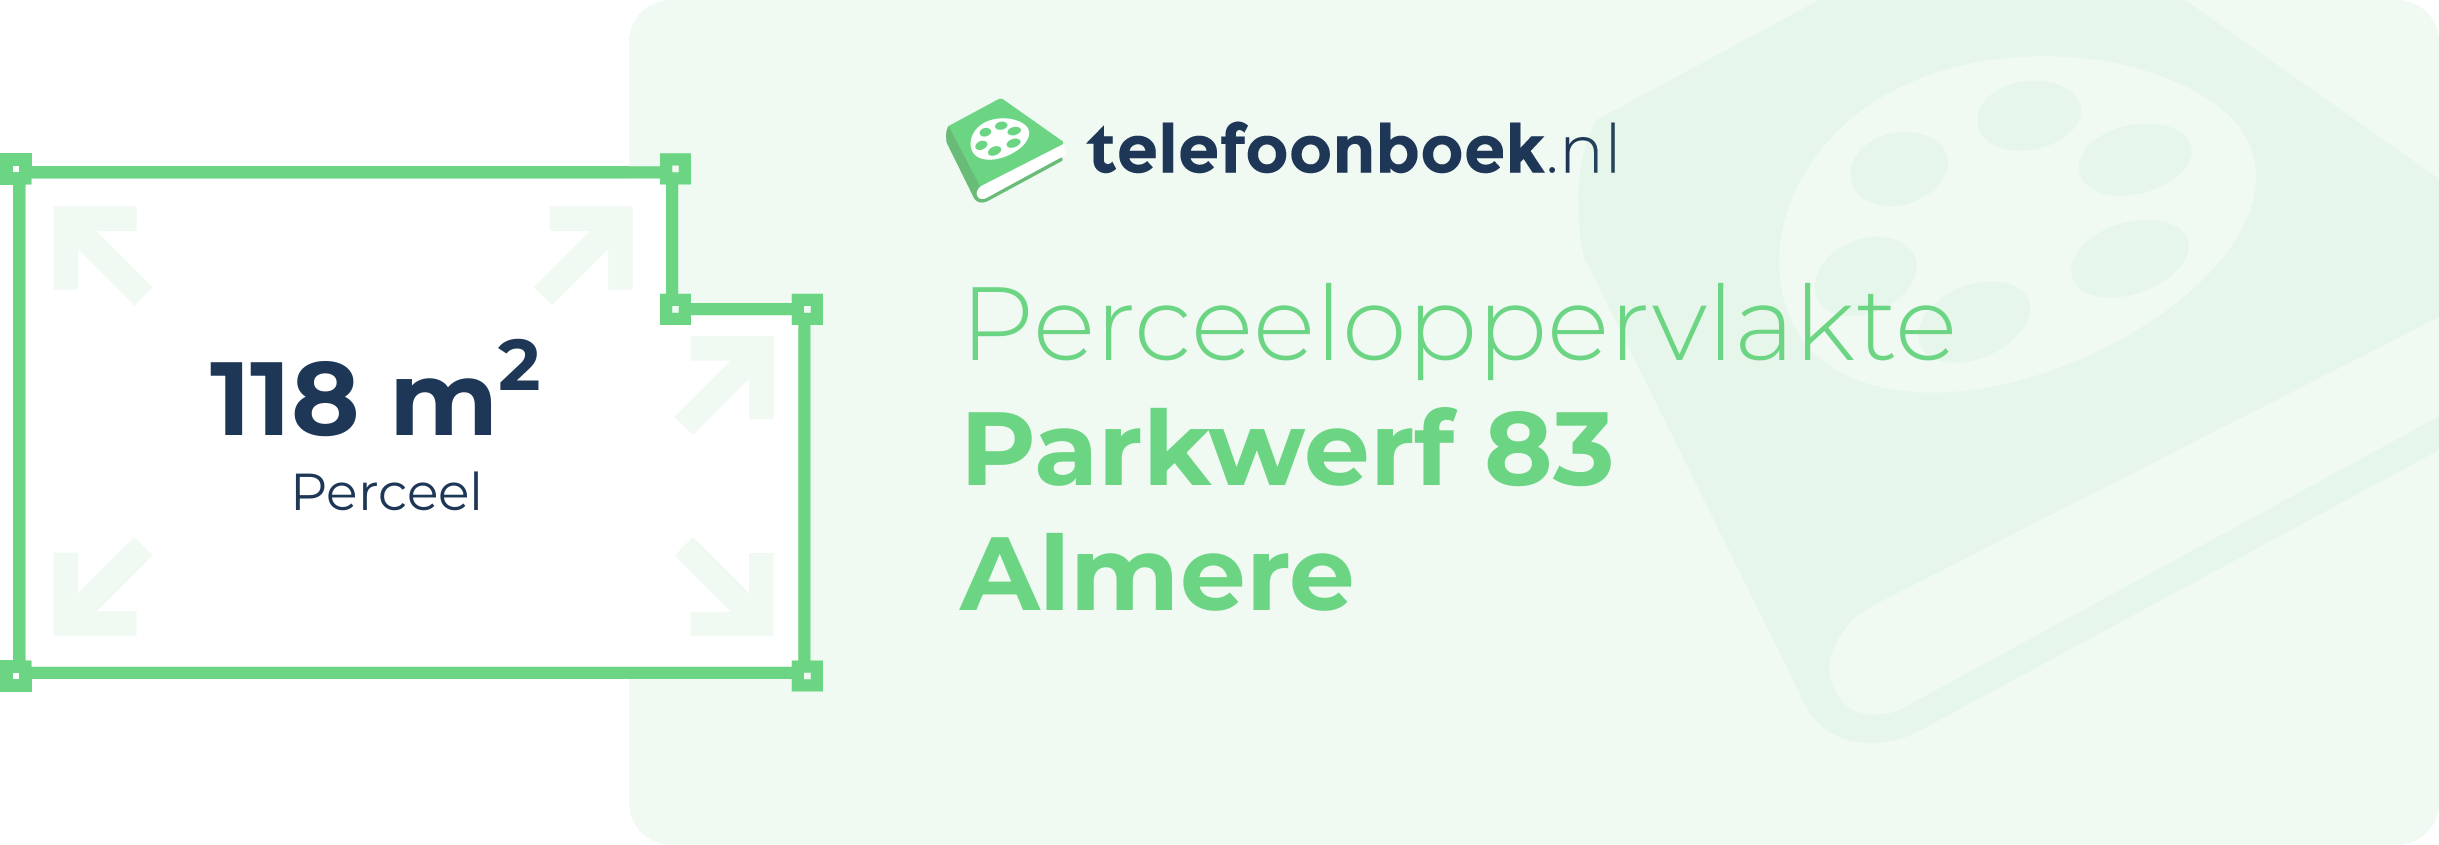 Perceeloppervlakte Parkwerf 83 Almere